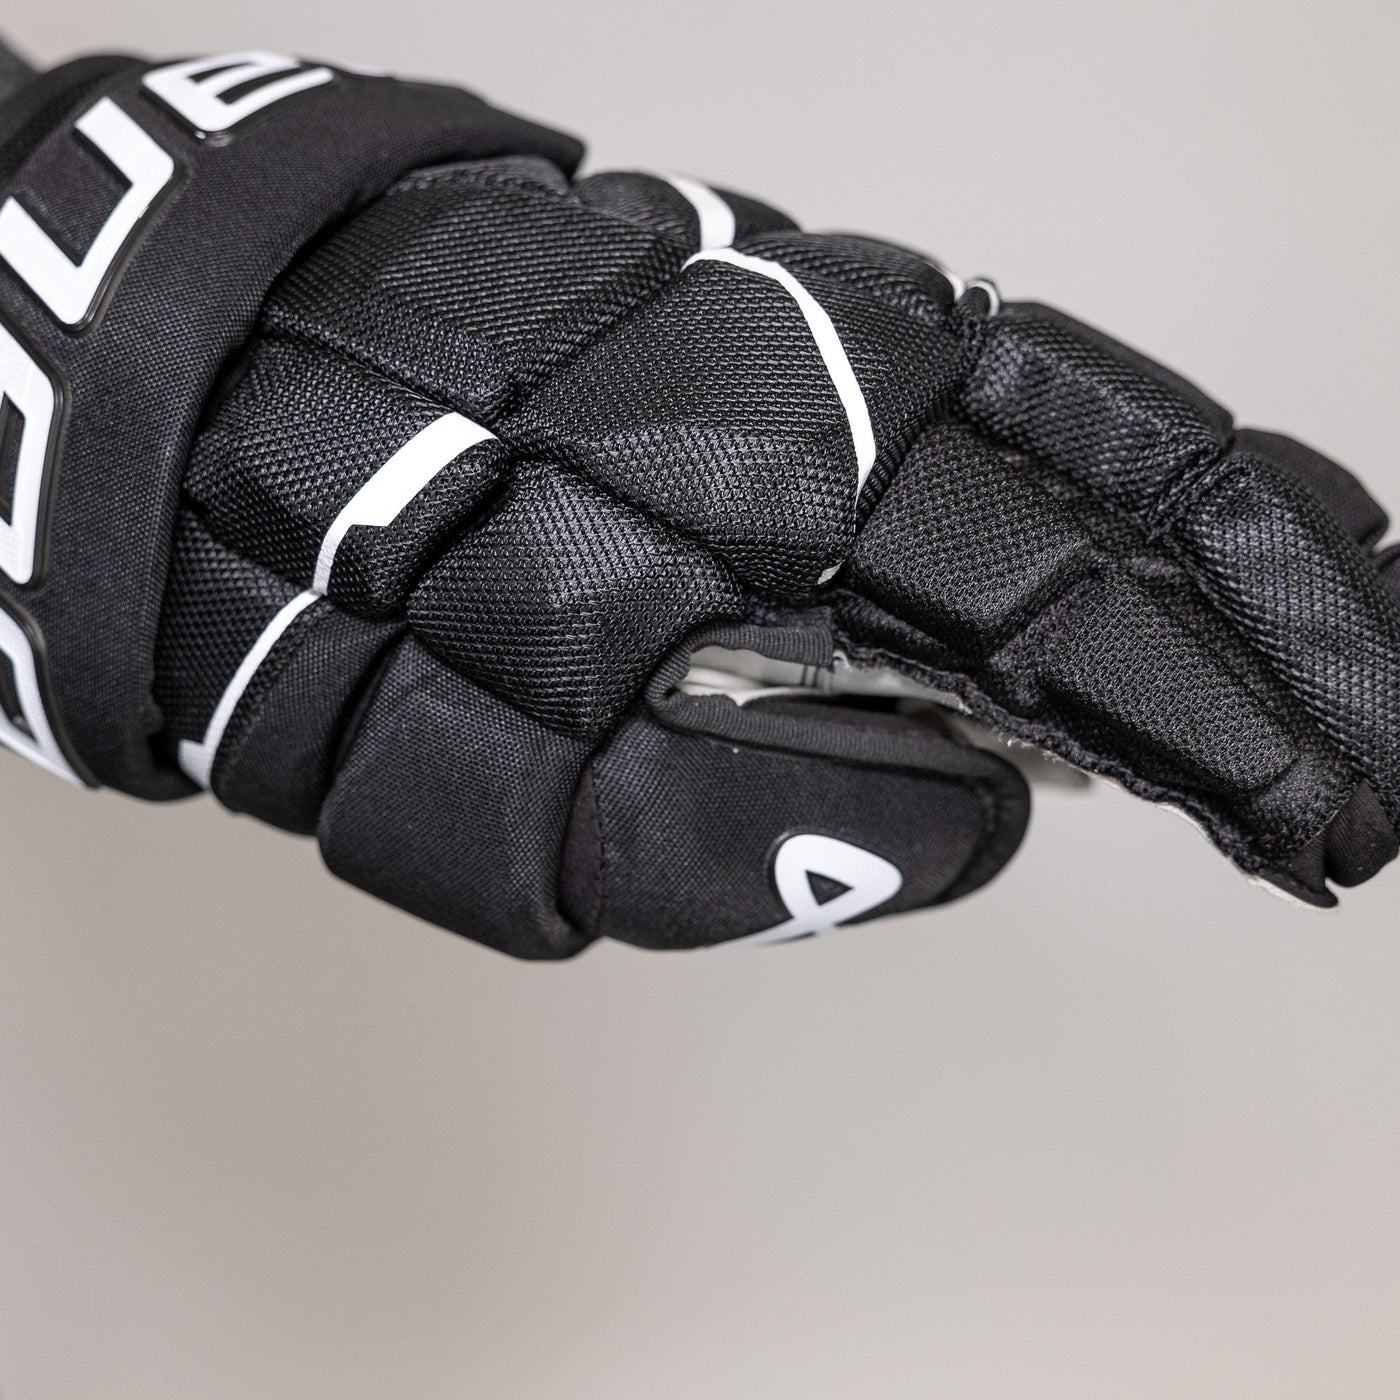 Bauer Supreme Mach Senior Hockey Gloves - The Hockey Shop Source For Sports